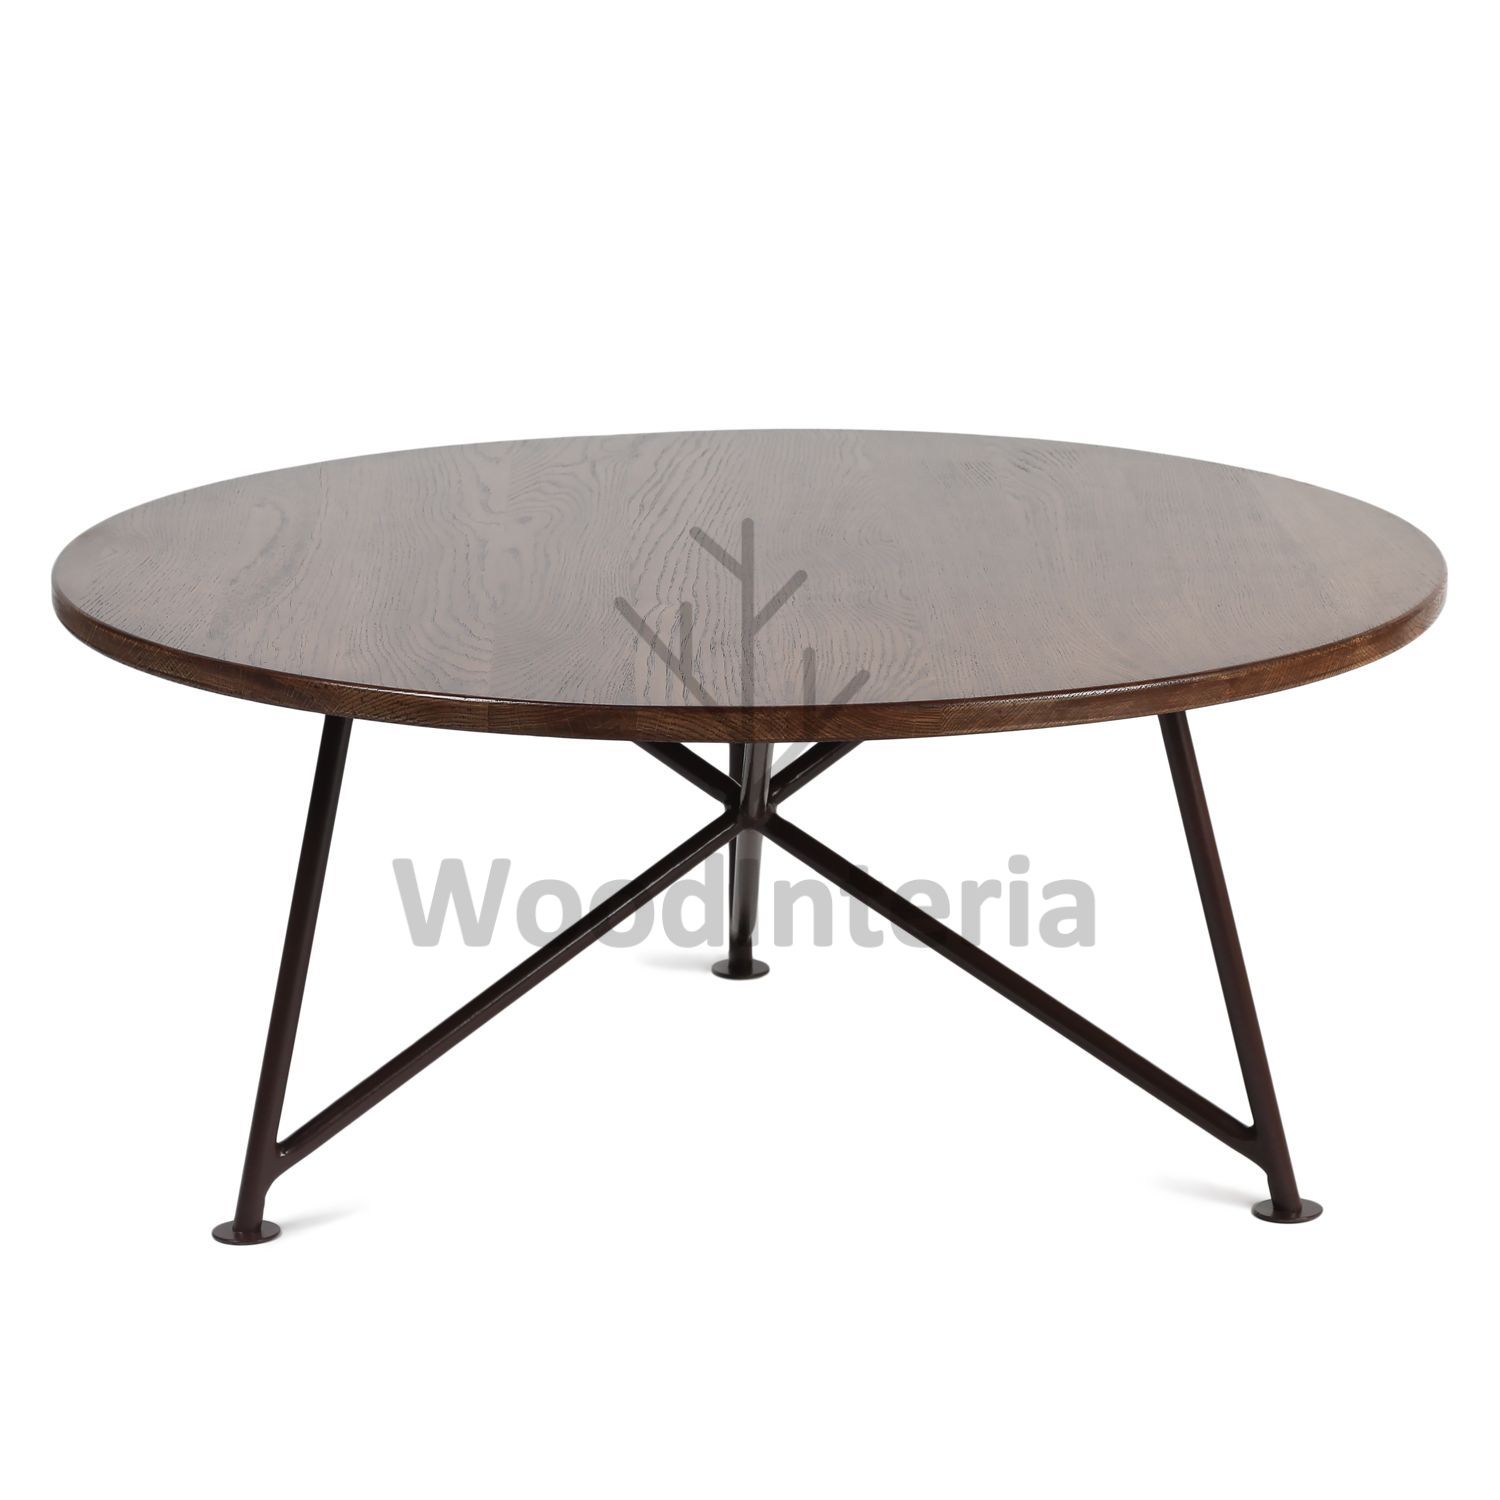 фото кофейный стол oak rod round в интерьере лофт эко | WoodInteria